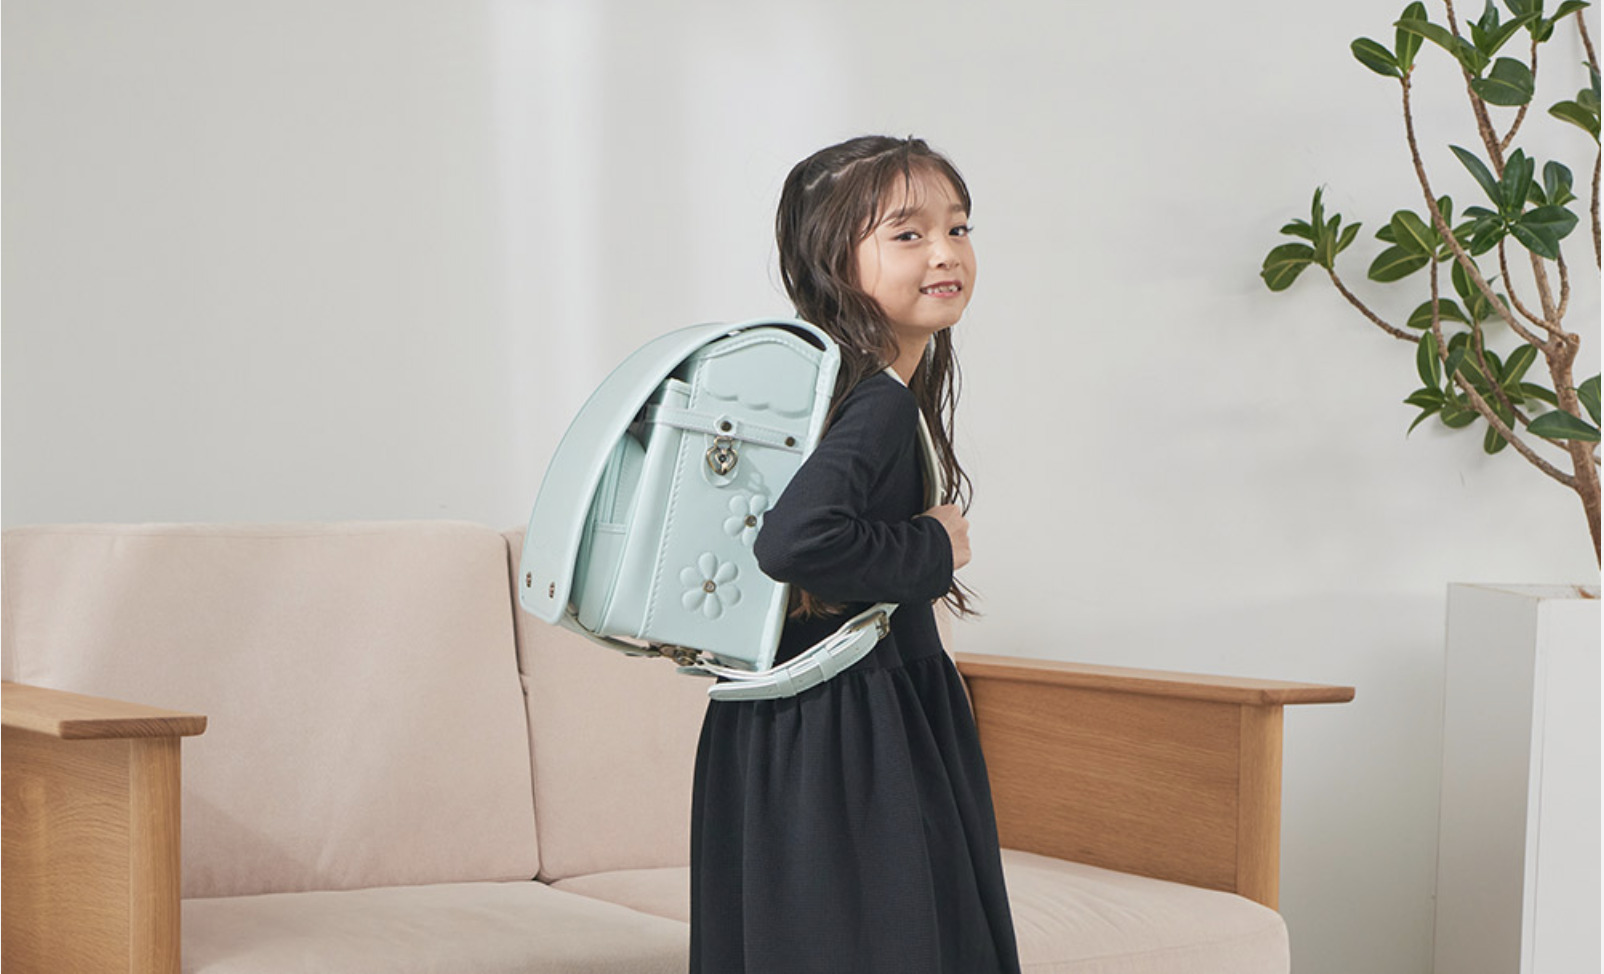 school-bag-buy-where